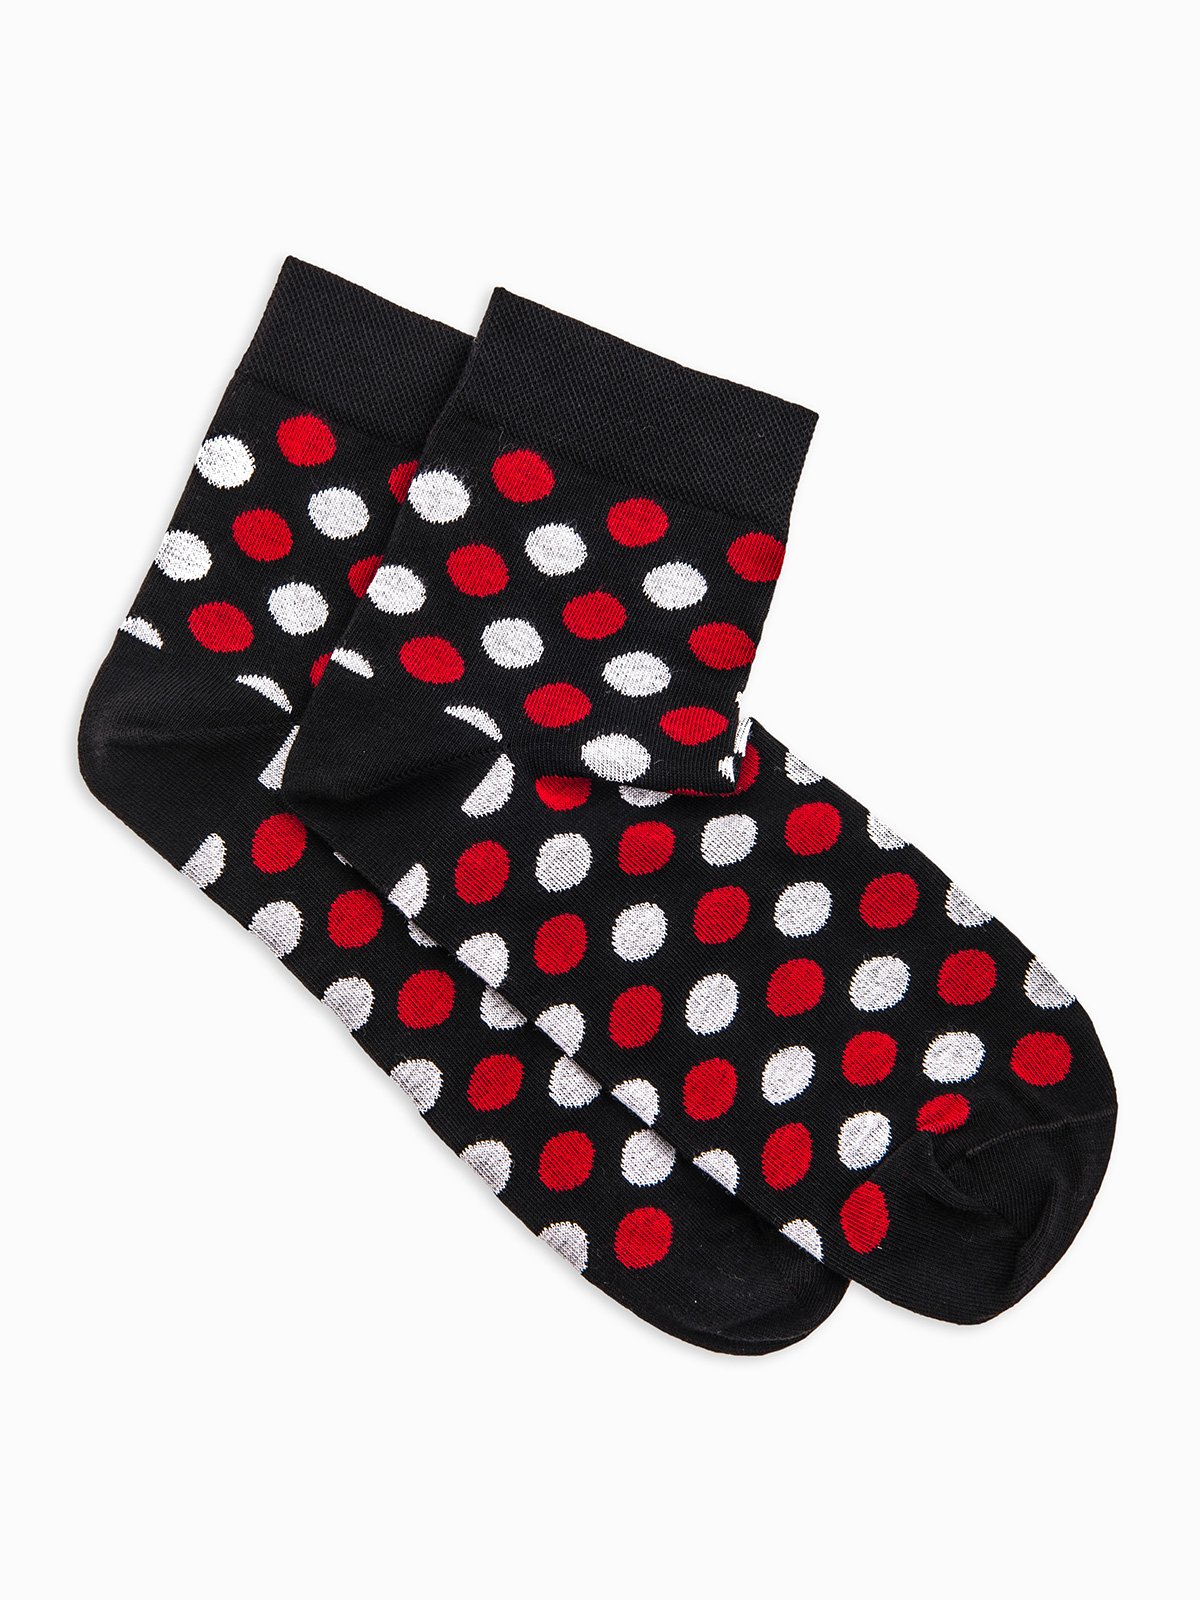 Men's patterned socks U09 - black | MODONE wholesale - Clothing For Men